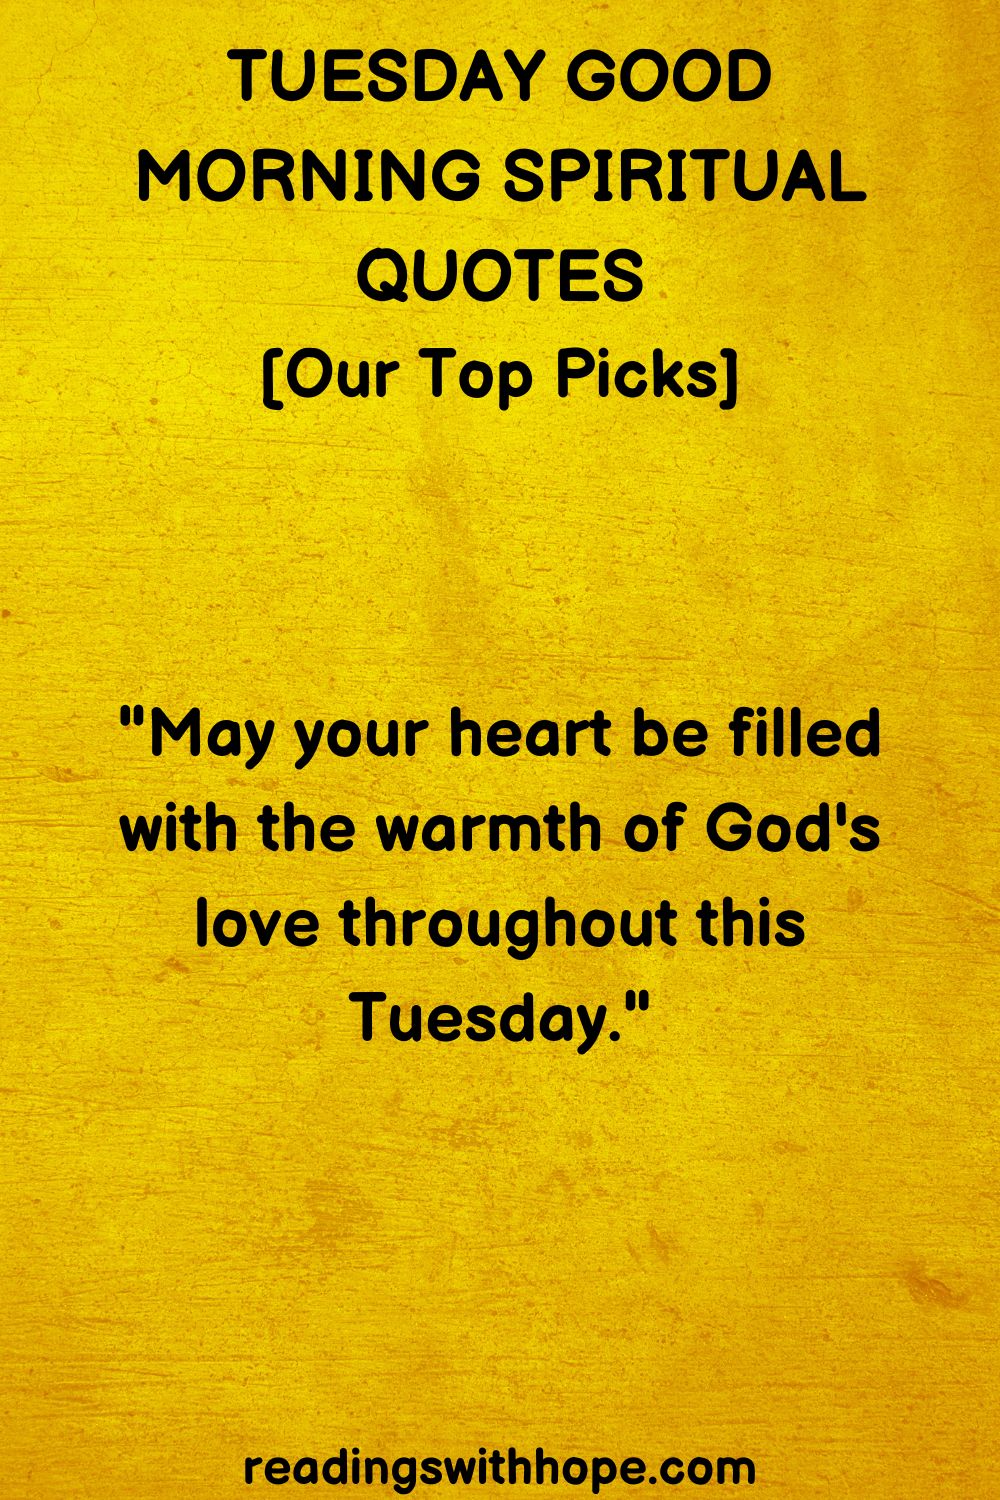 Tuesday Good Morning Spiritual Quotes